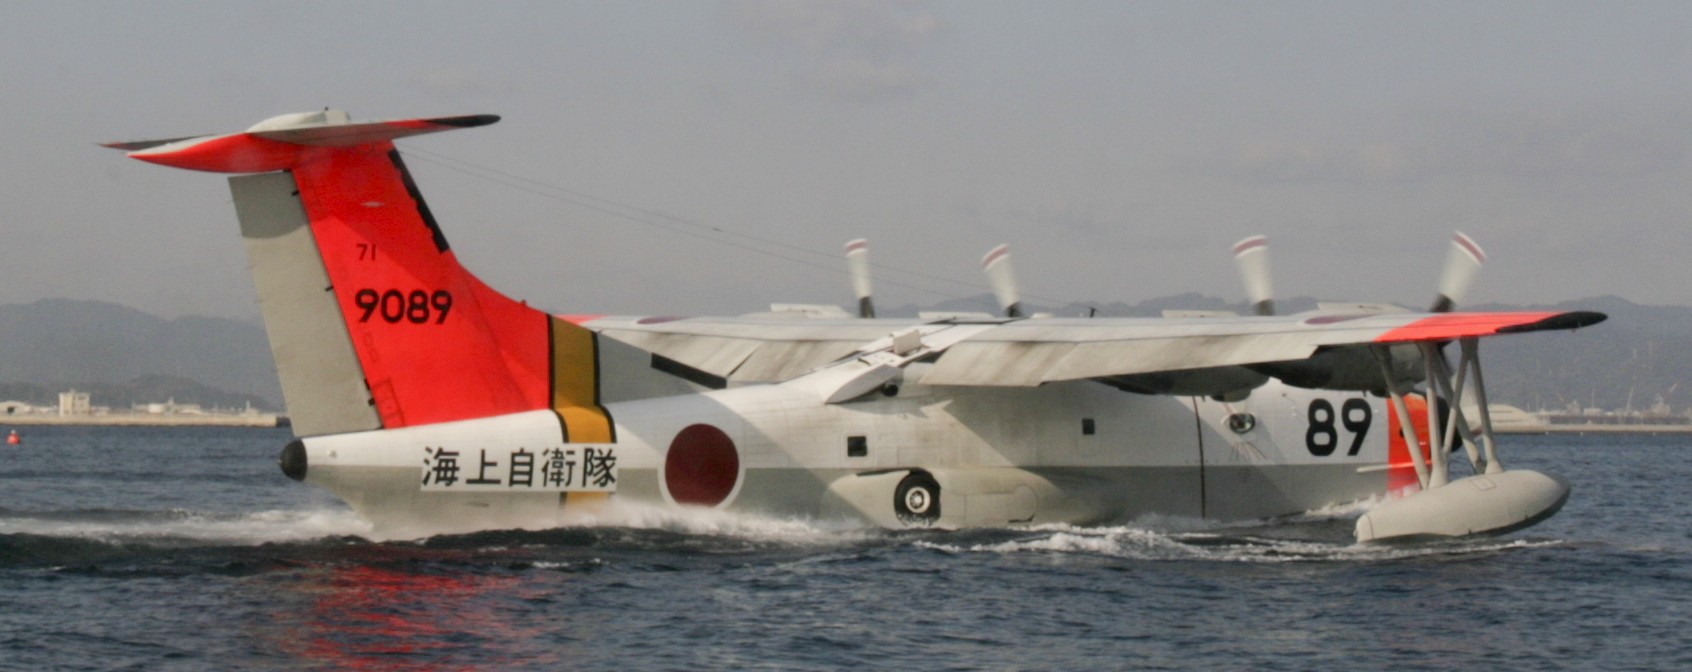 shin meiwa us-1a flying boat japan maritime self defense force jmsdf sar 71 squadron atsugi 9089 02